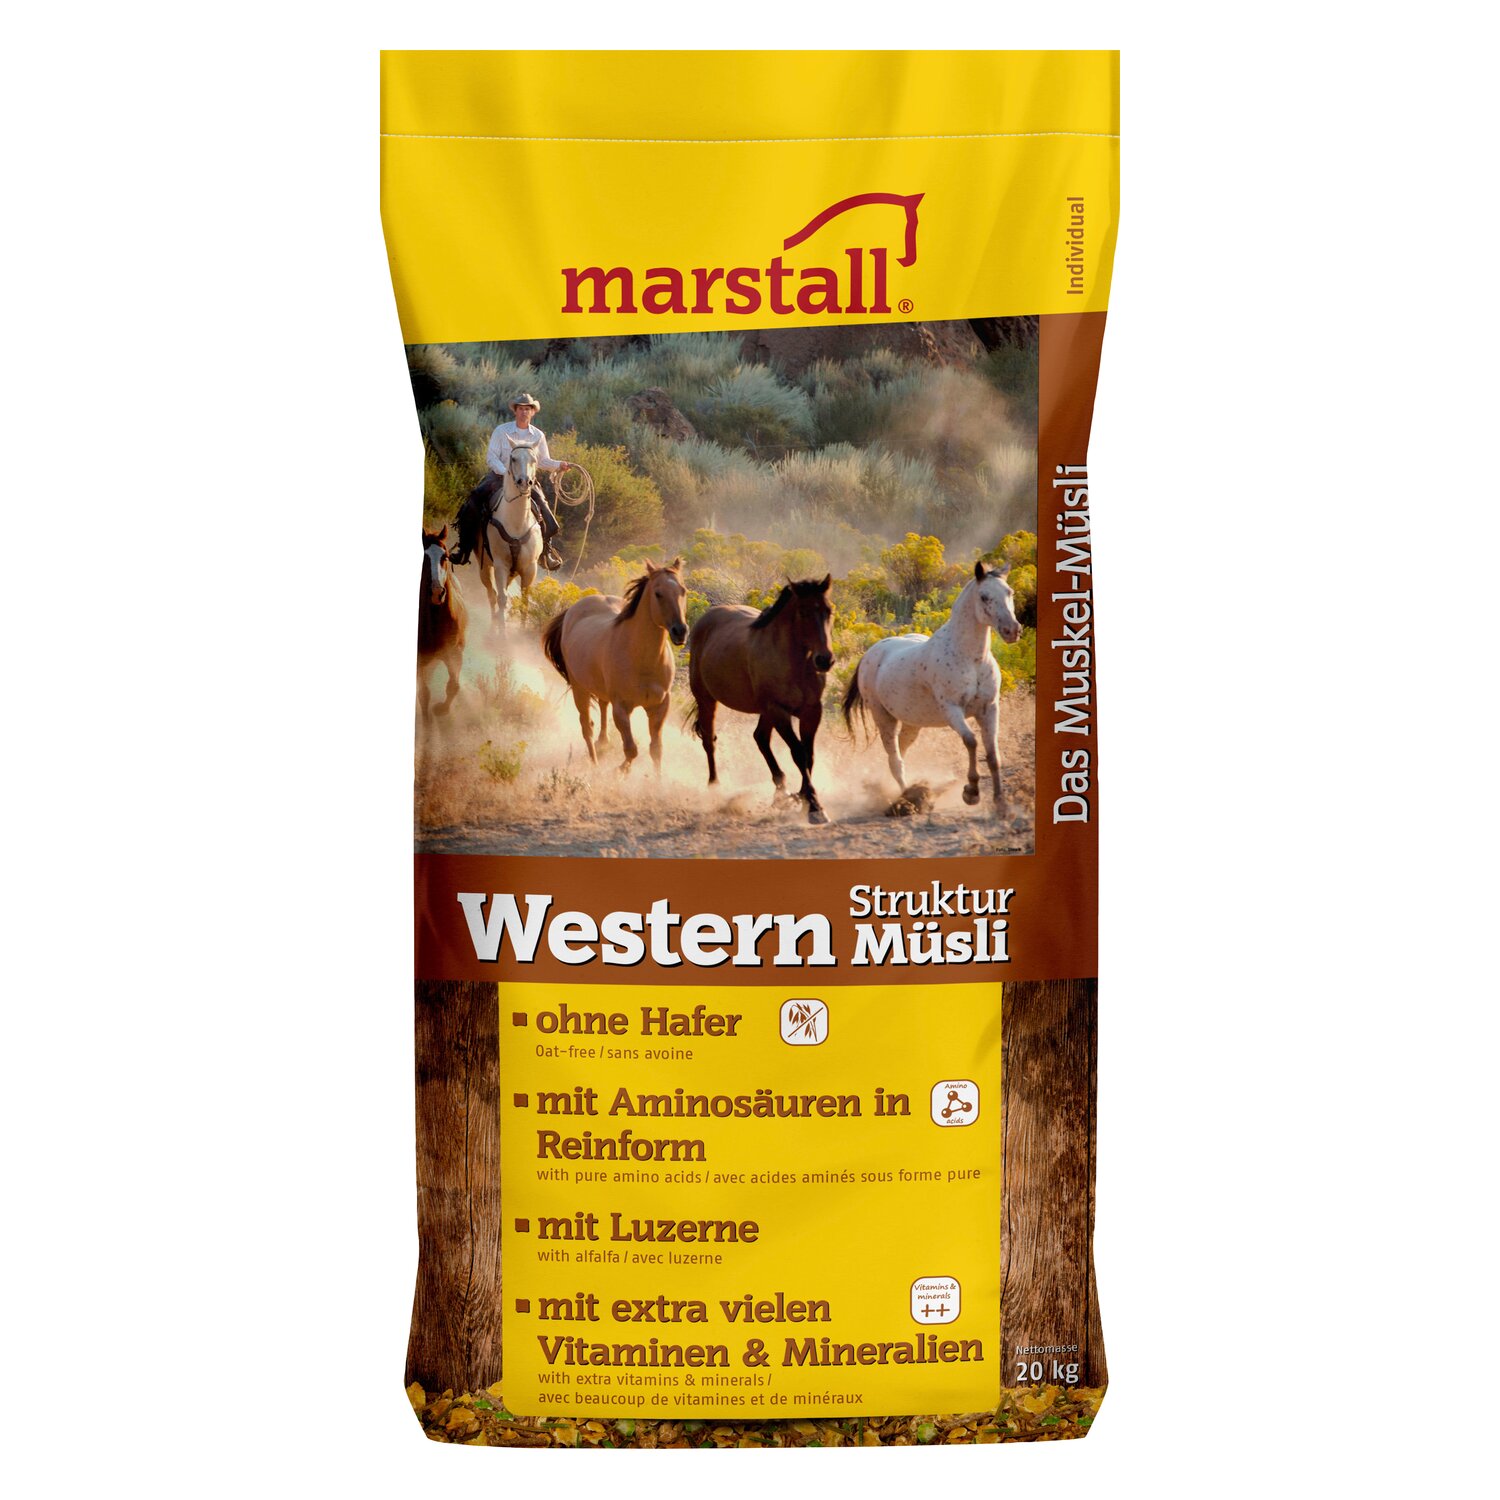 marstall Western 20 kg